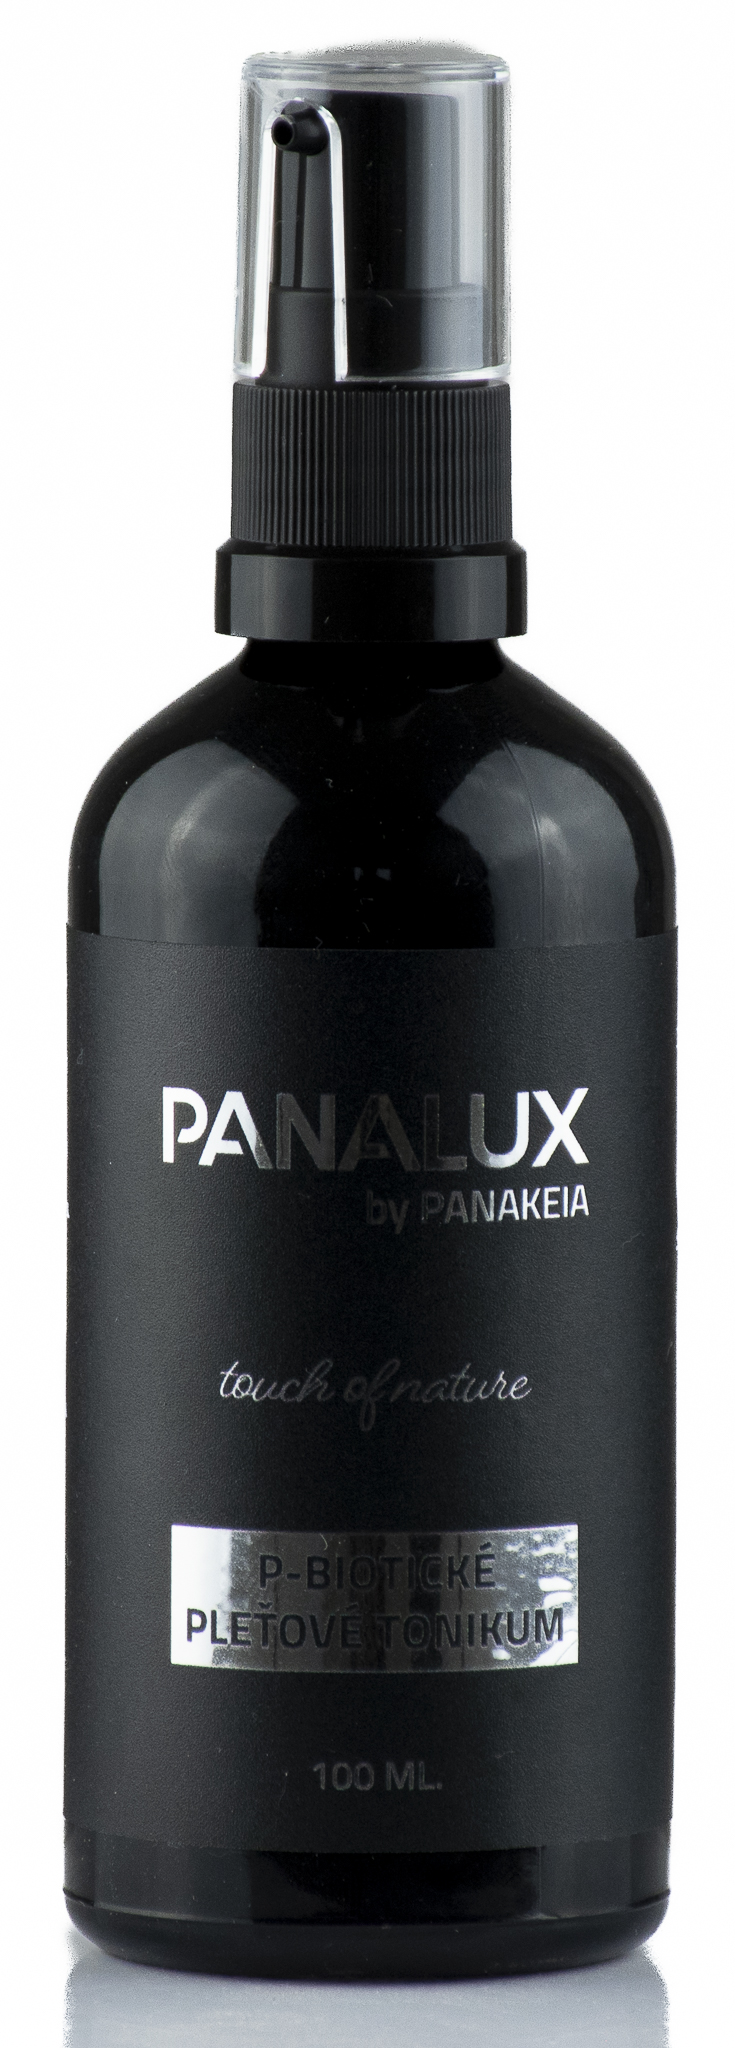 PANALUX by PANAKEIA P-Biotické pleťové tonikum 100ml